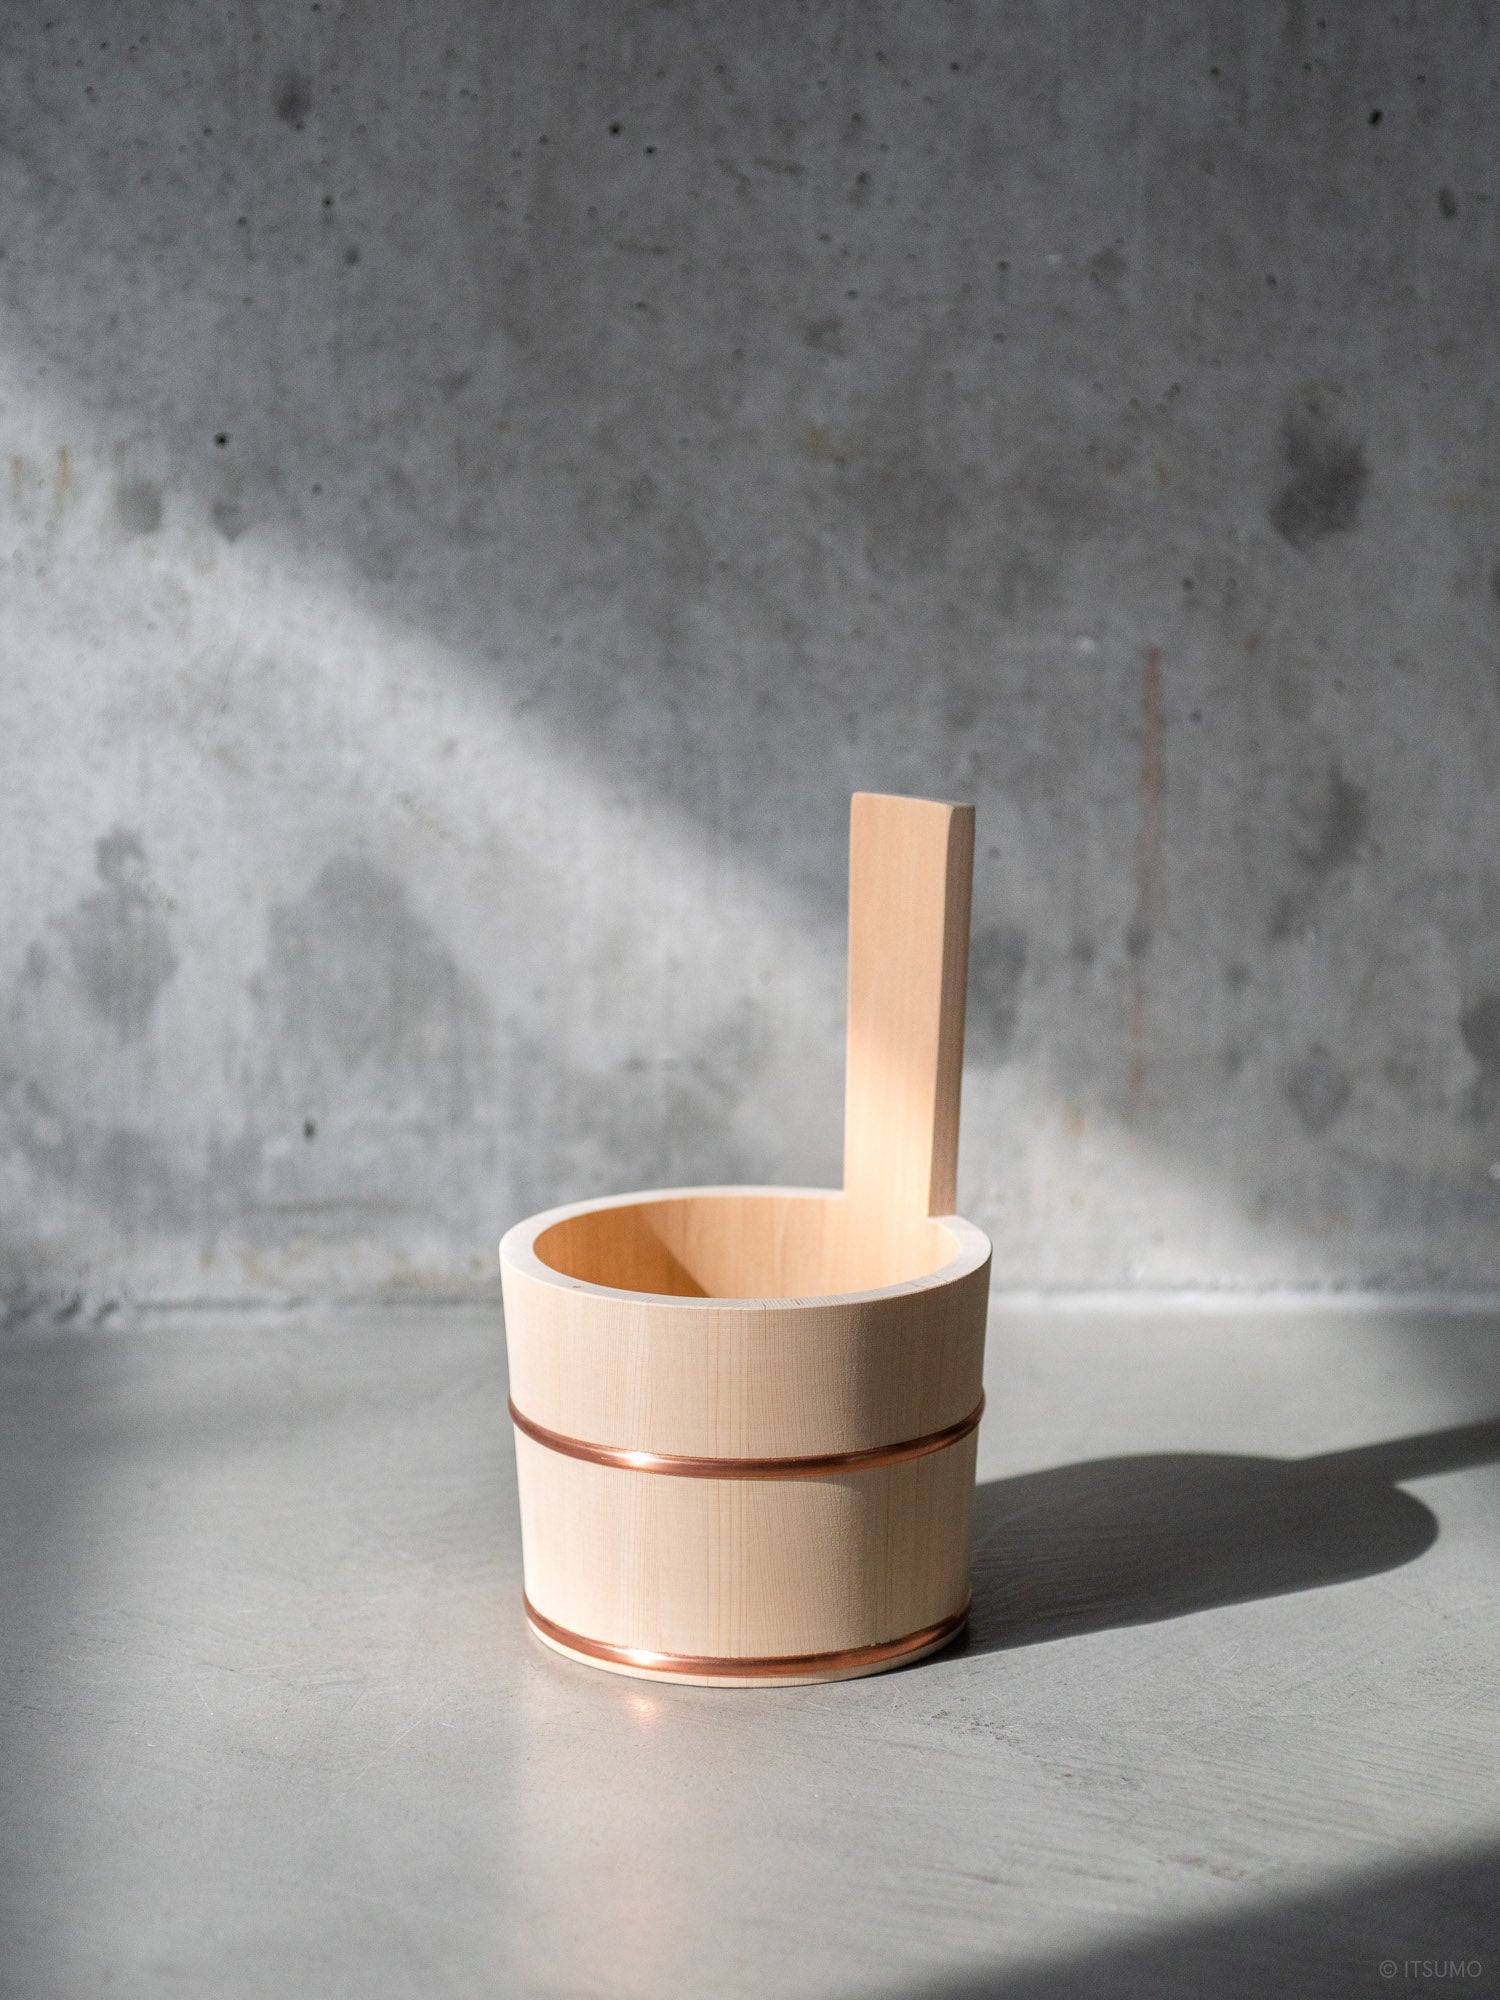 Japanese hinoki wood bath bucket with handle and copper trim